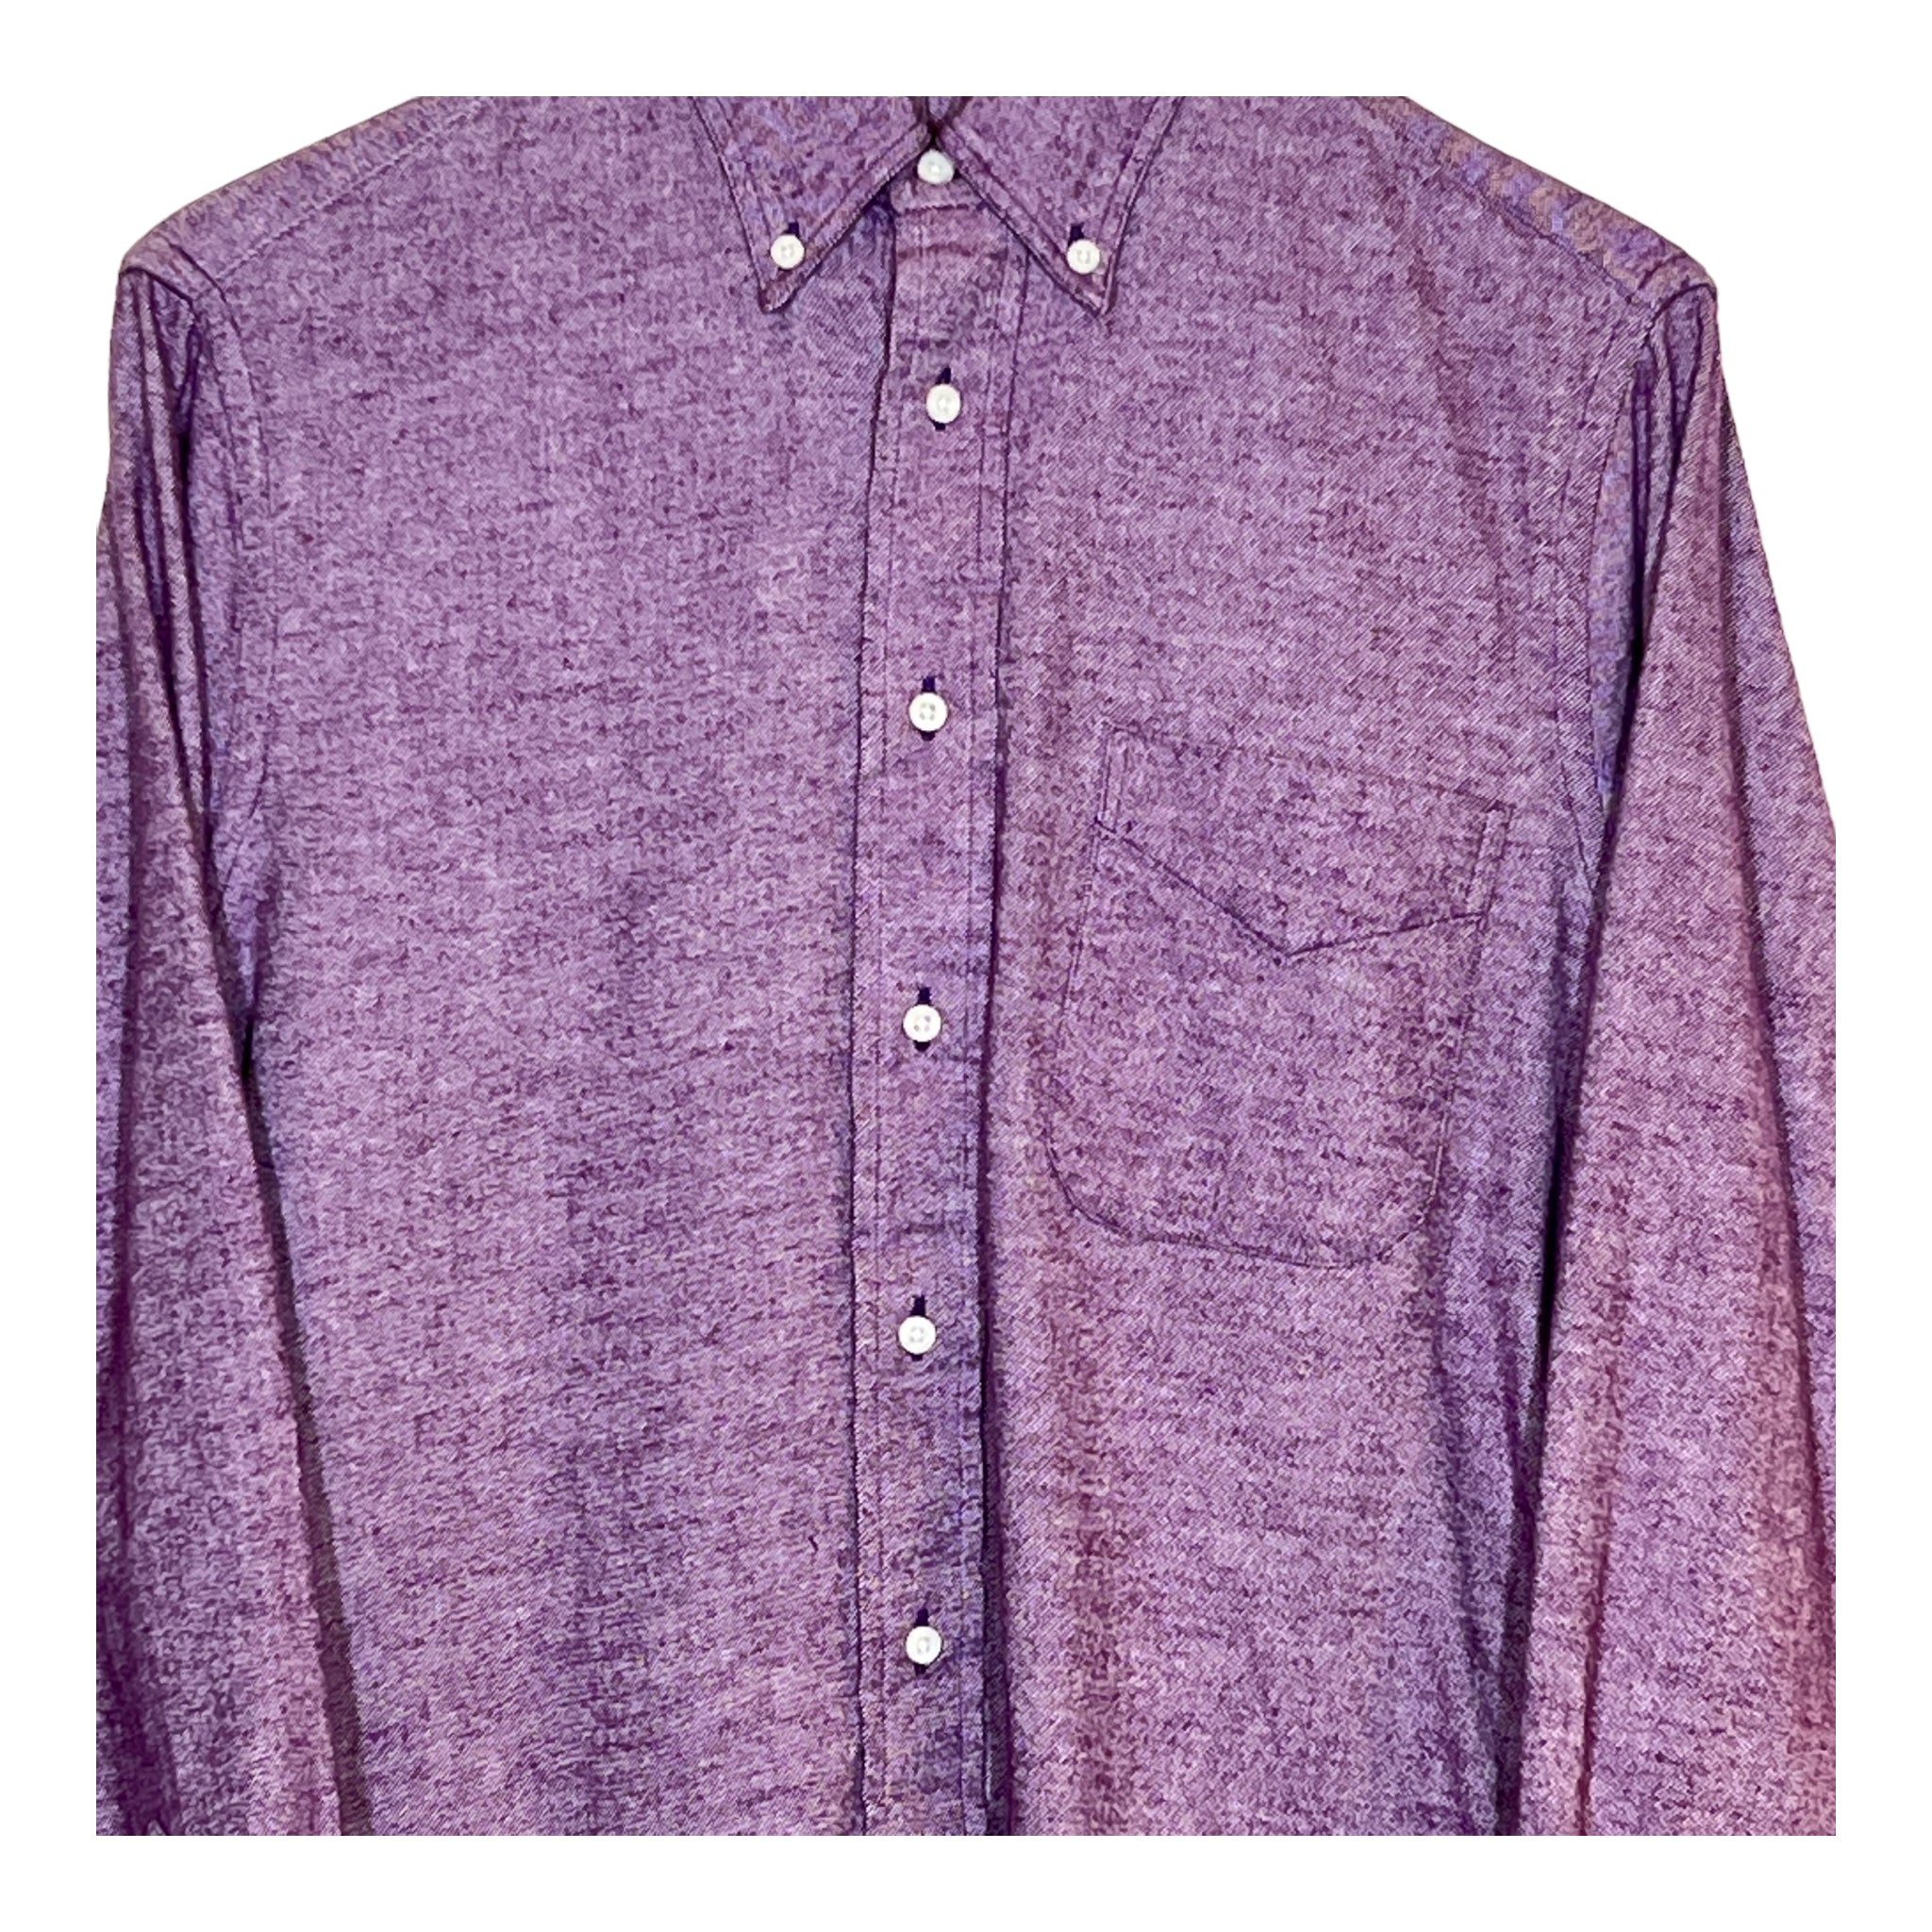 Gitman Brothers Vintage brushed purple chambray